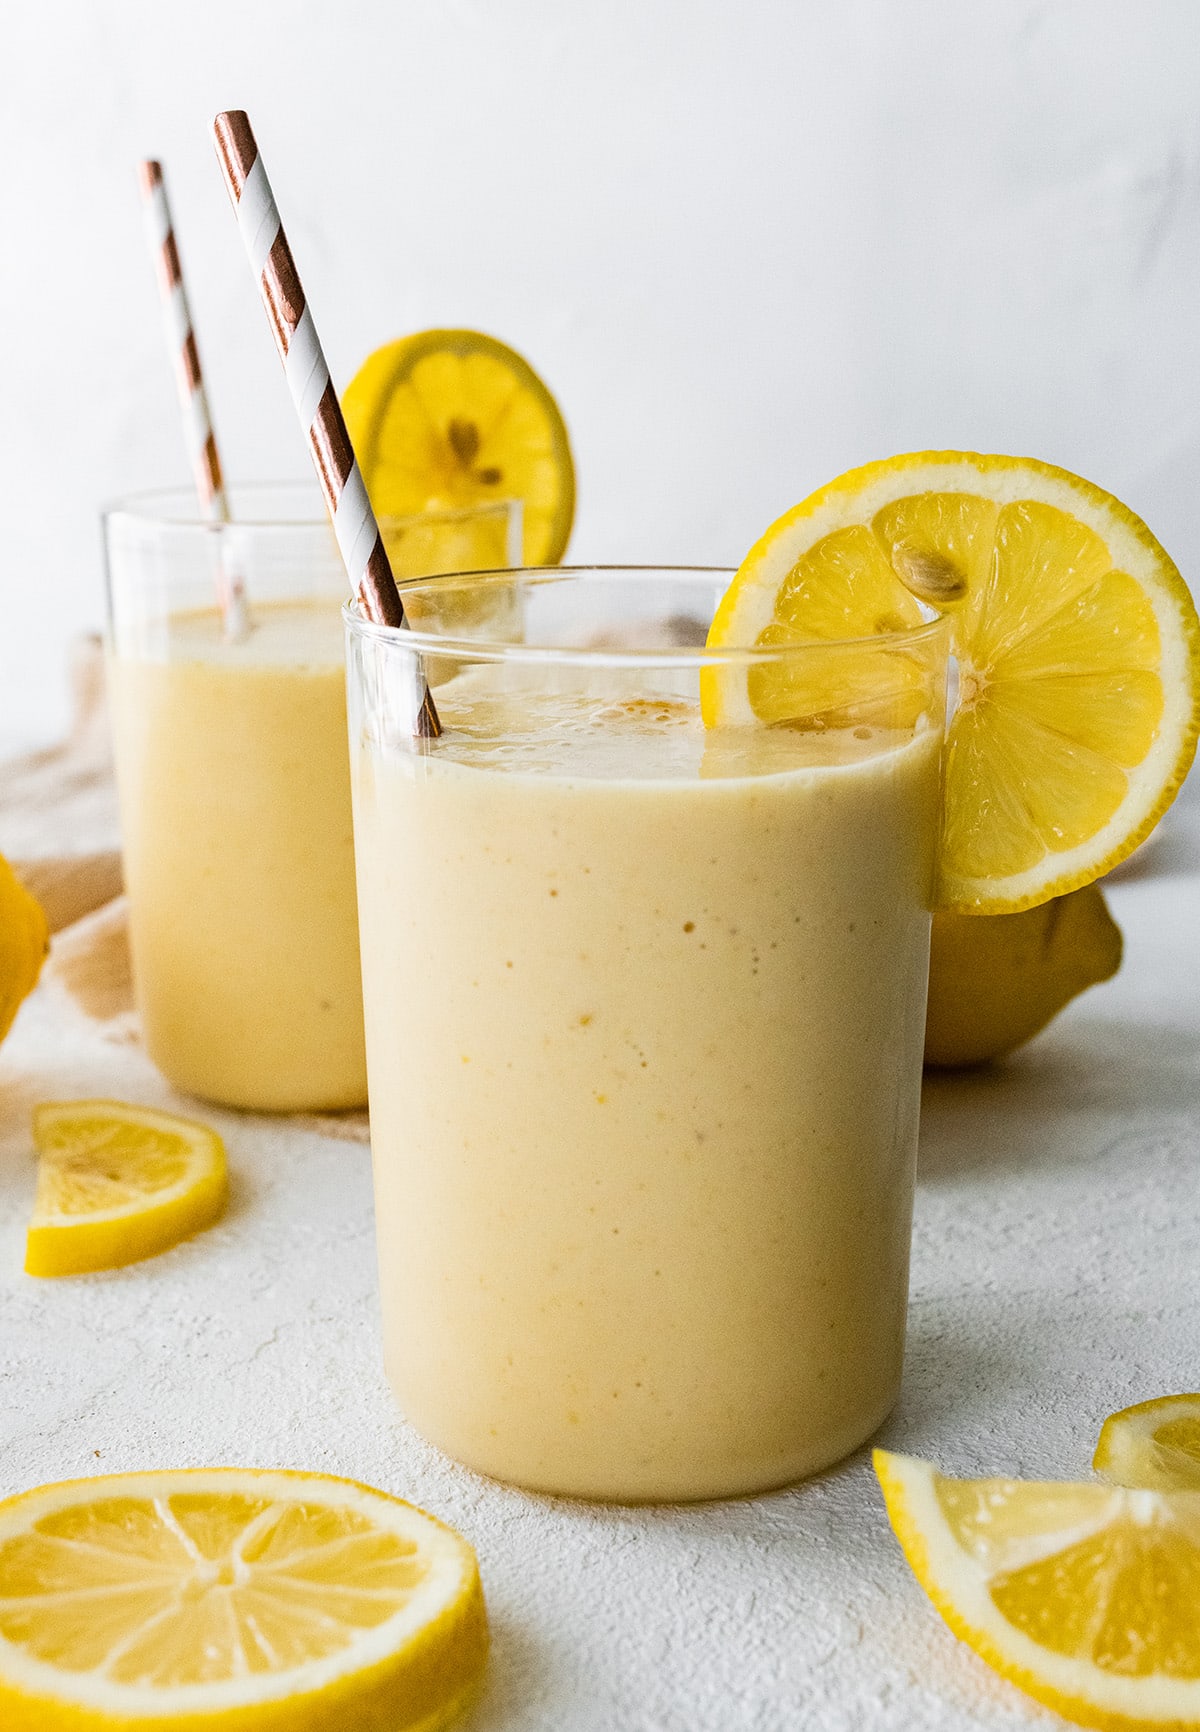 Two lemon shakes with straws and slices of fresh lemon.